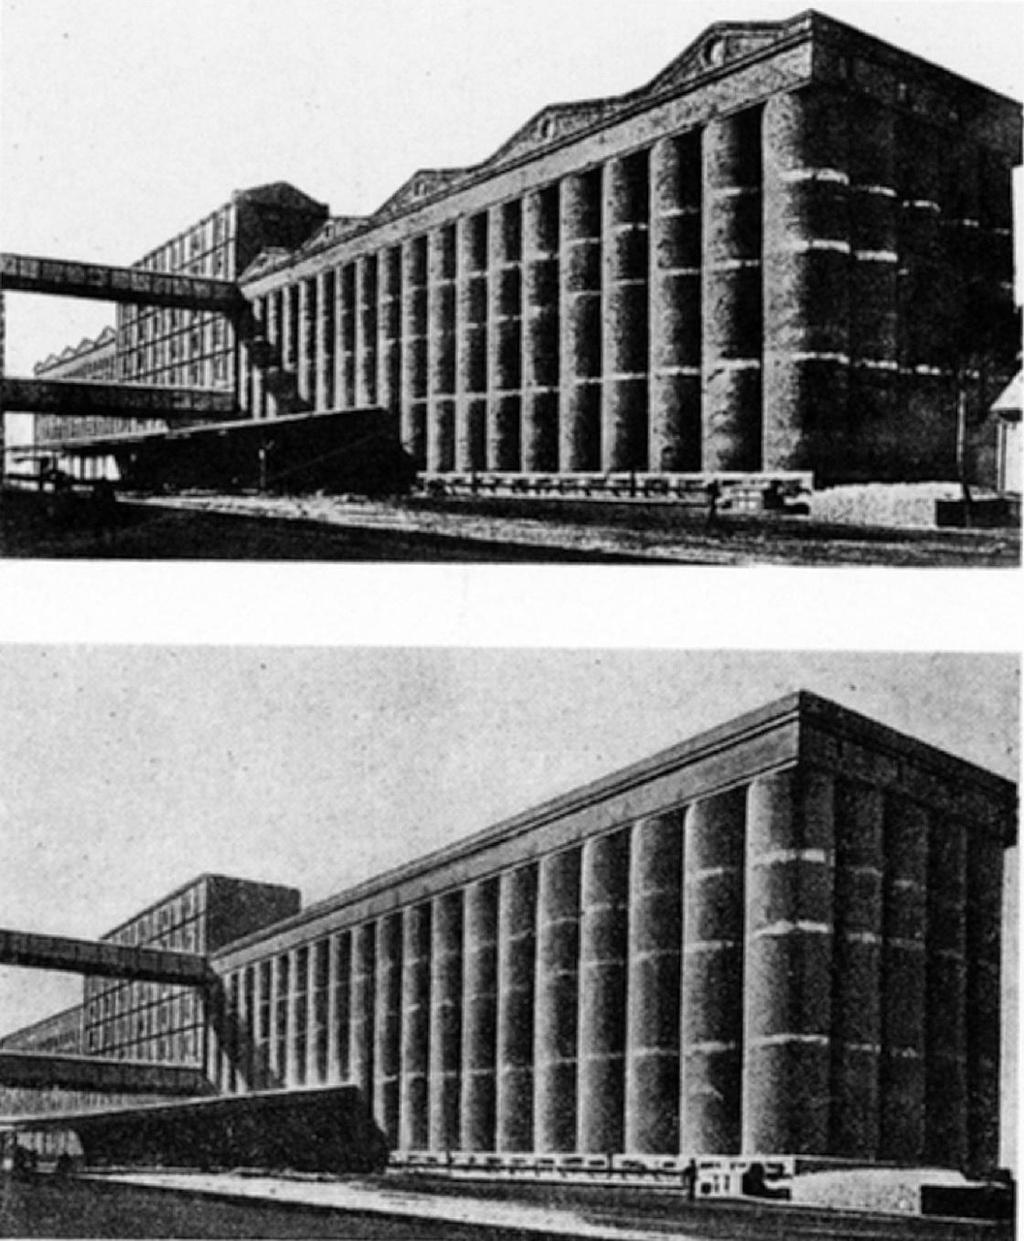 1920) : View of two grain silos,